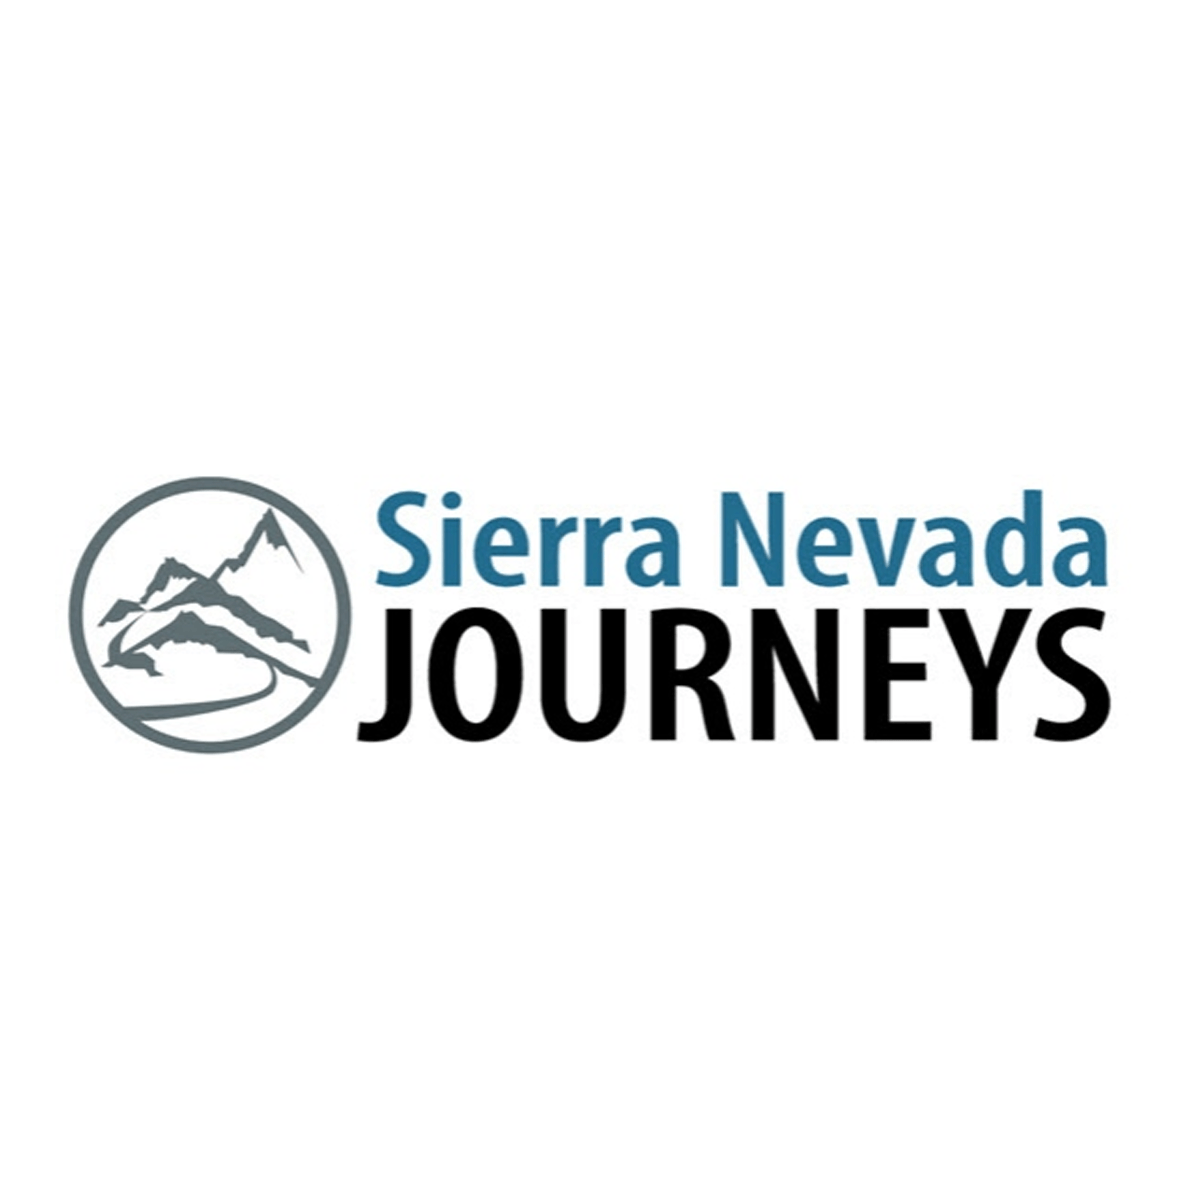 Sierra Nevada Journeys_Alyssa Wagner_Resized.png